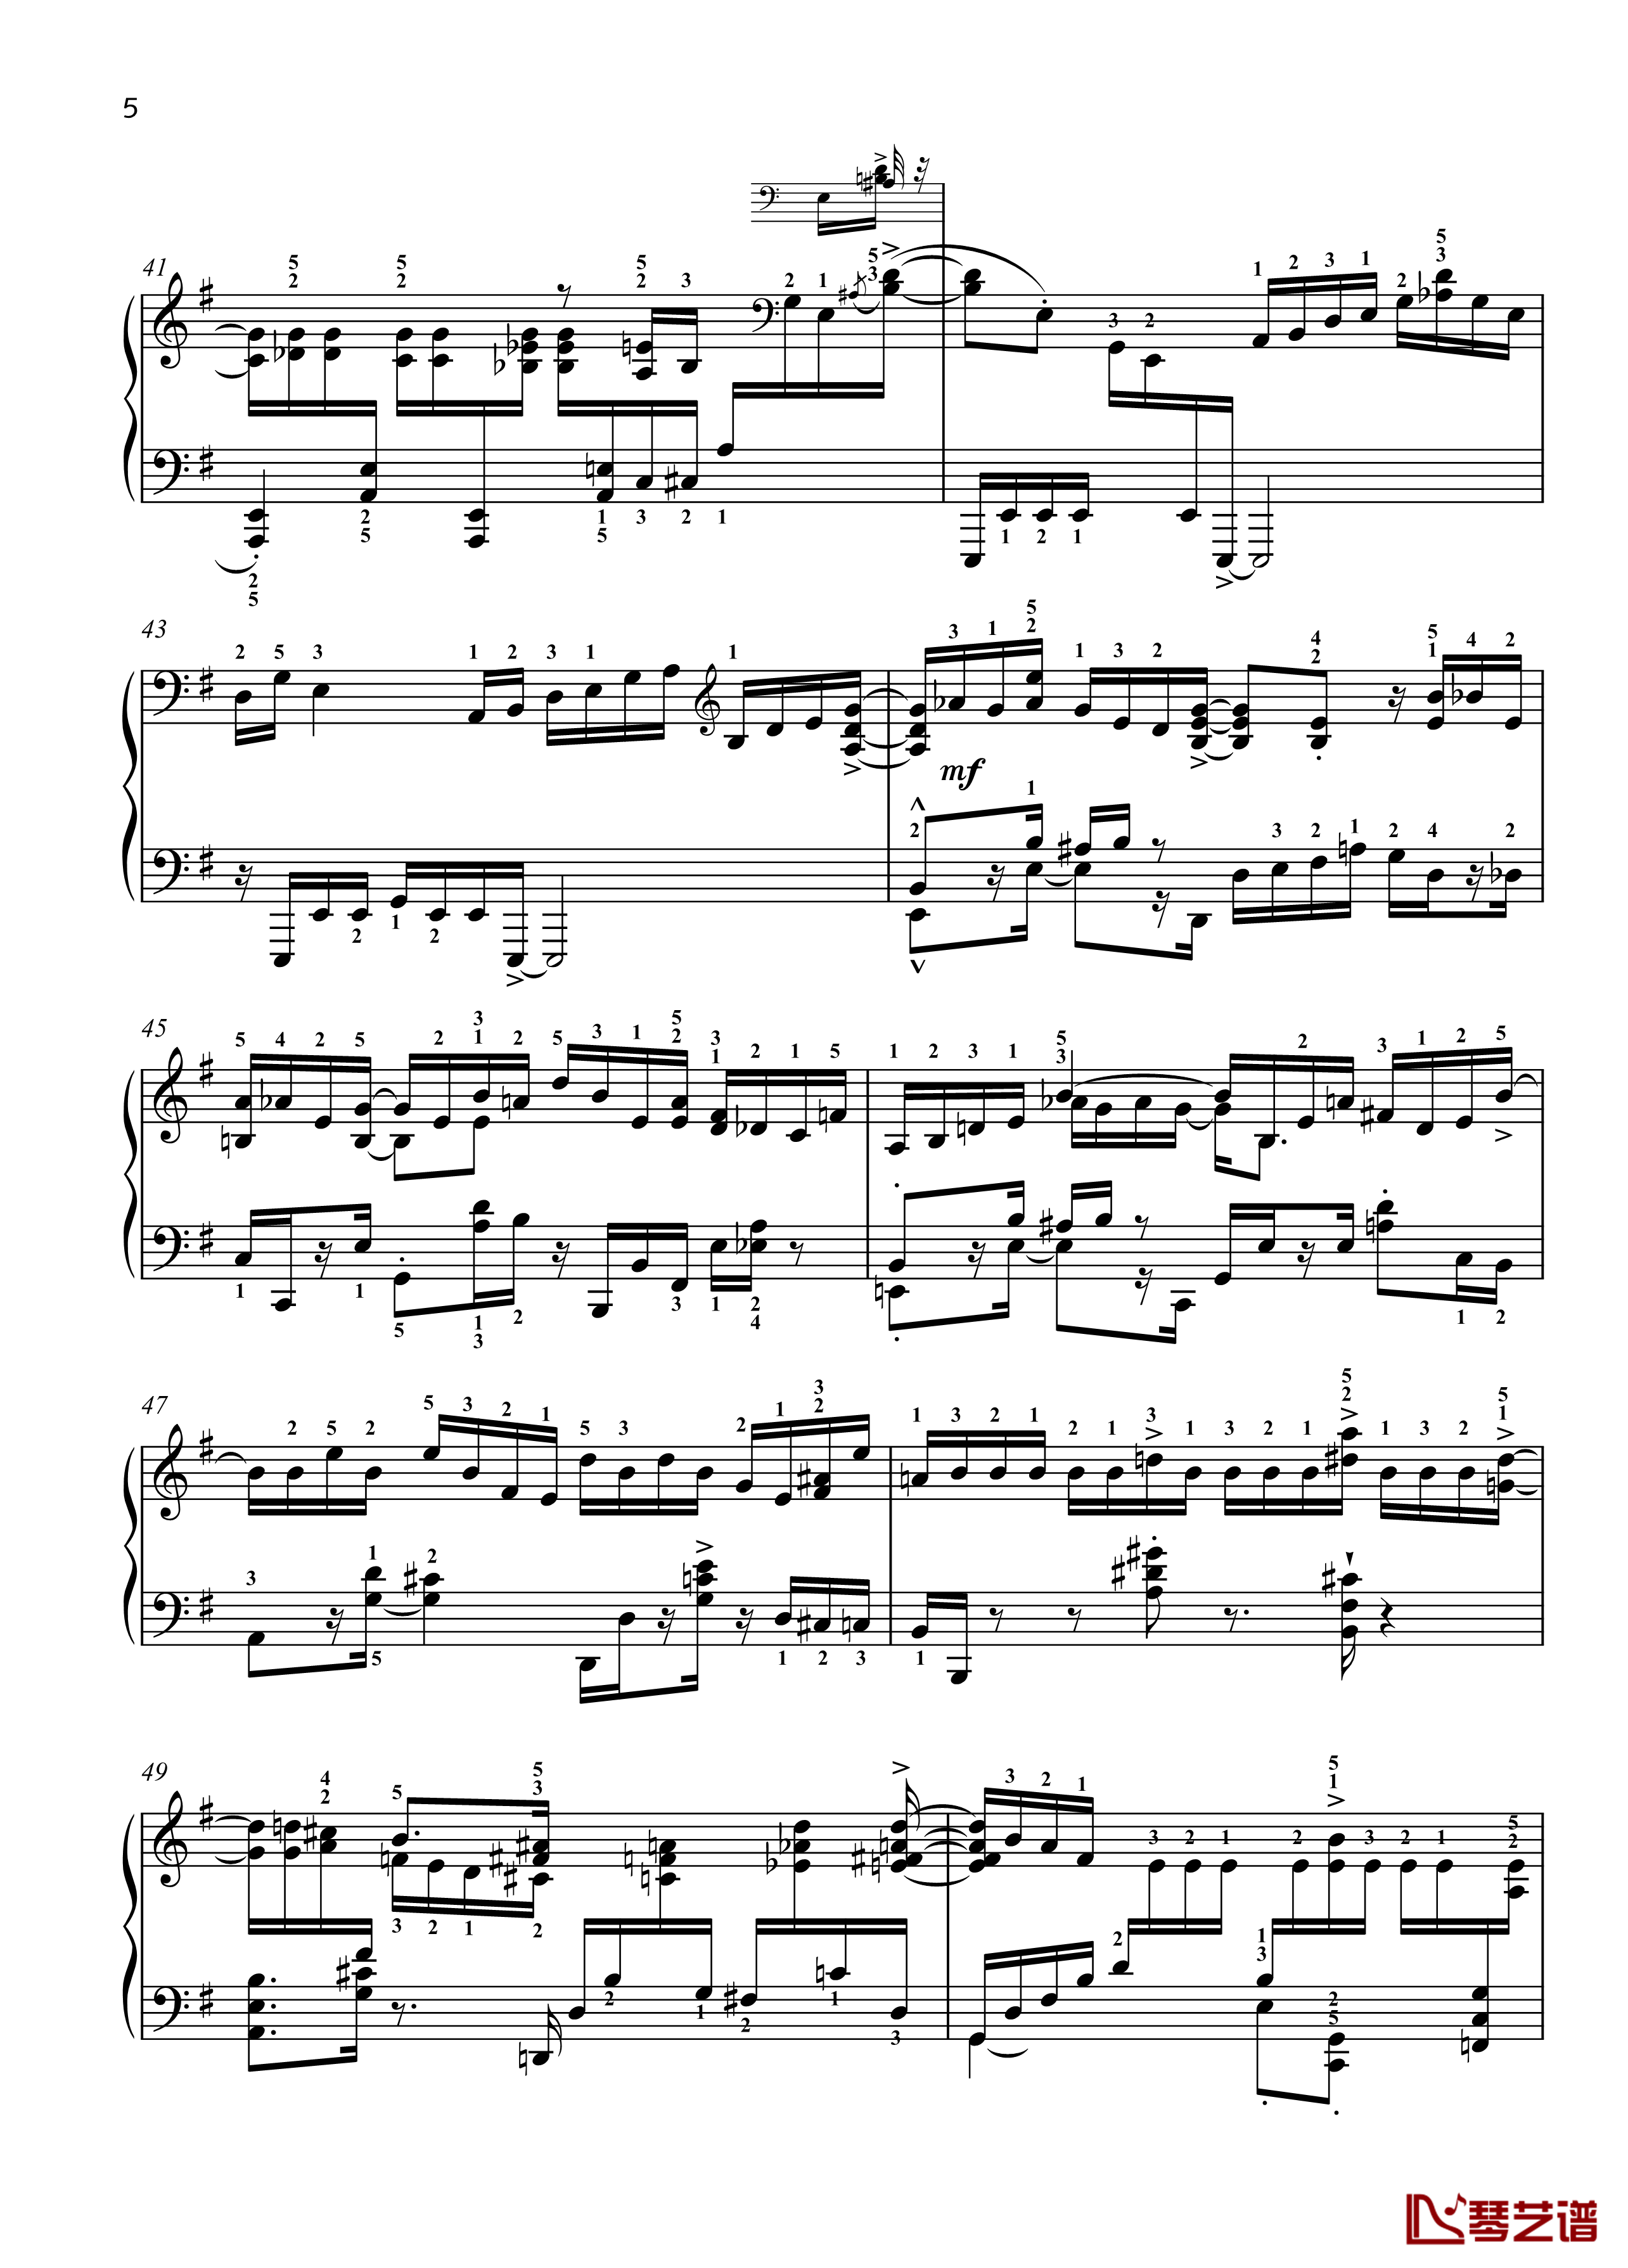 No. 3. Toccatina钢琴谱-带指法-八首音乐会练习曲 Eight Concert ?tudes Op 40-爵士-尼古拉·凯帕斯汀5